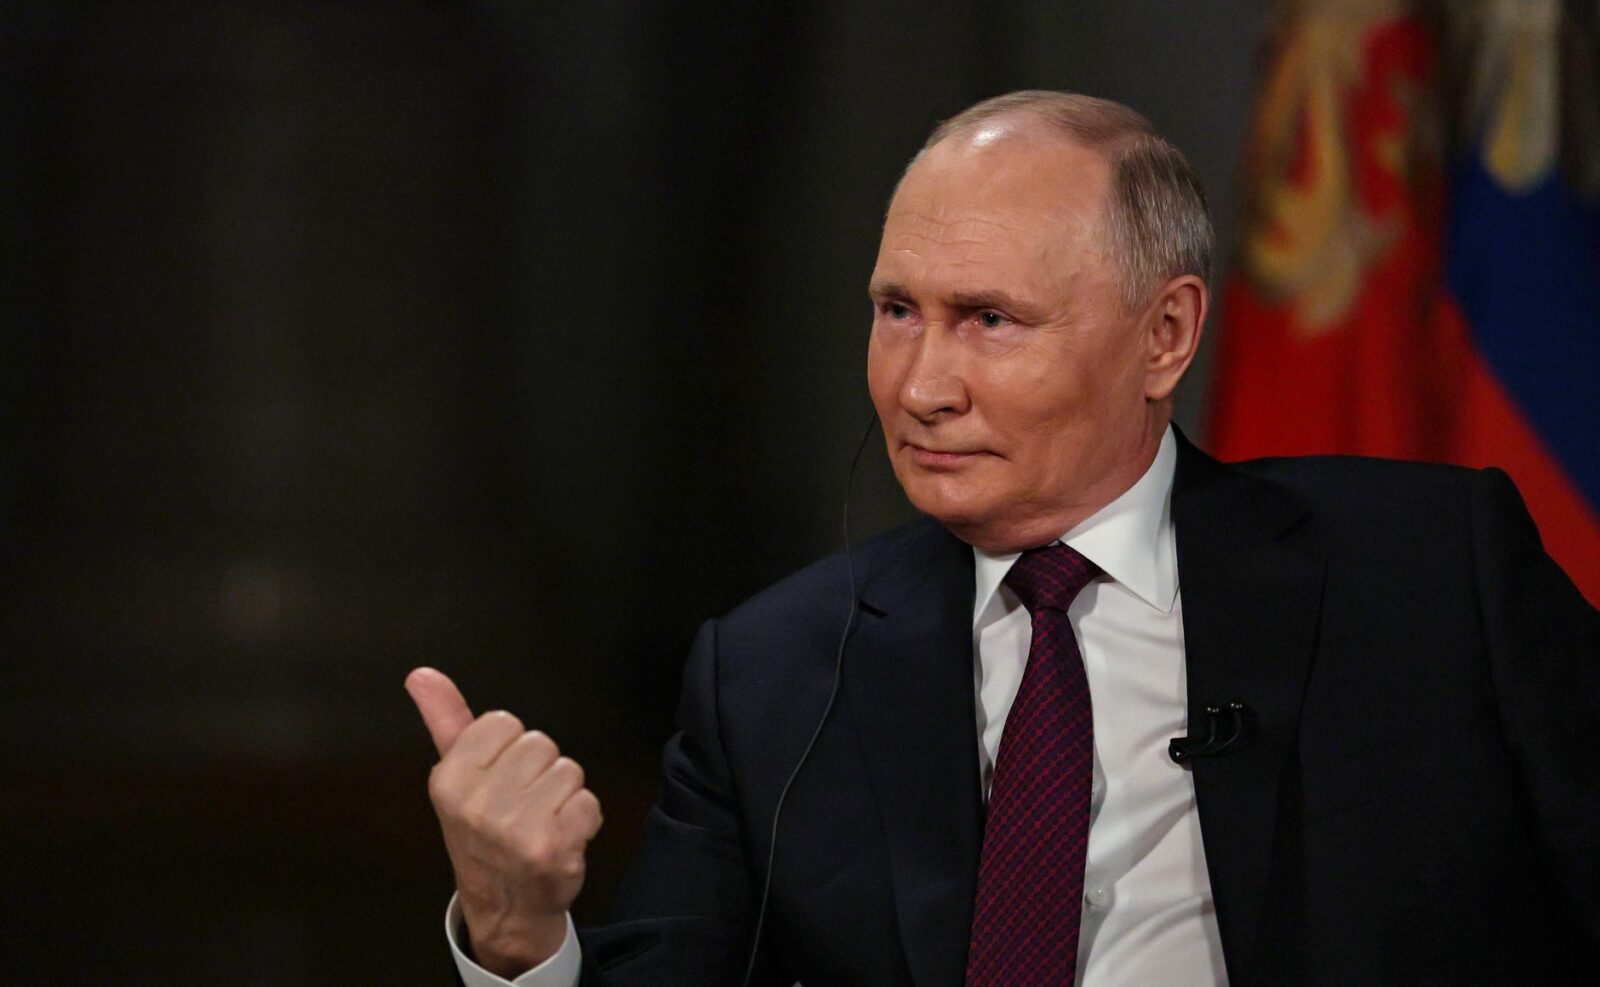 Ход президента РФ Путина загнал Запад в тупик, спутав его планы